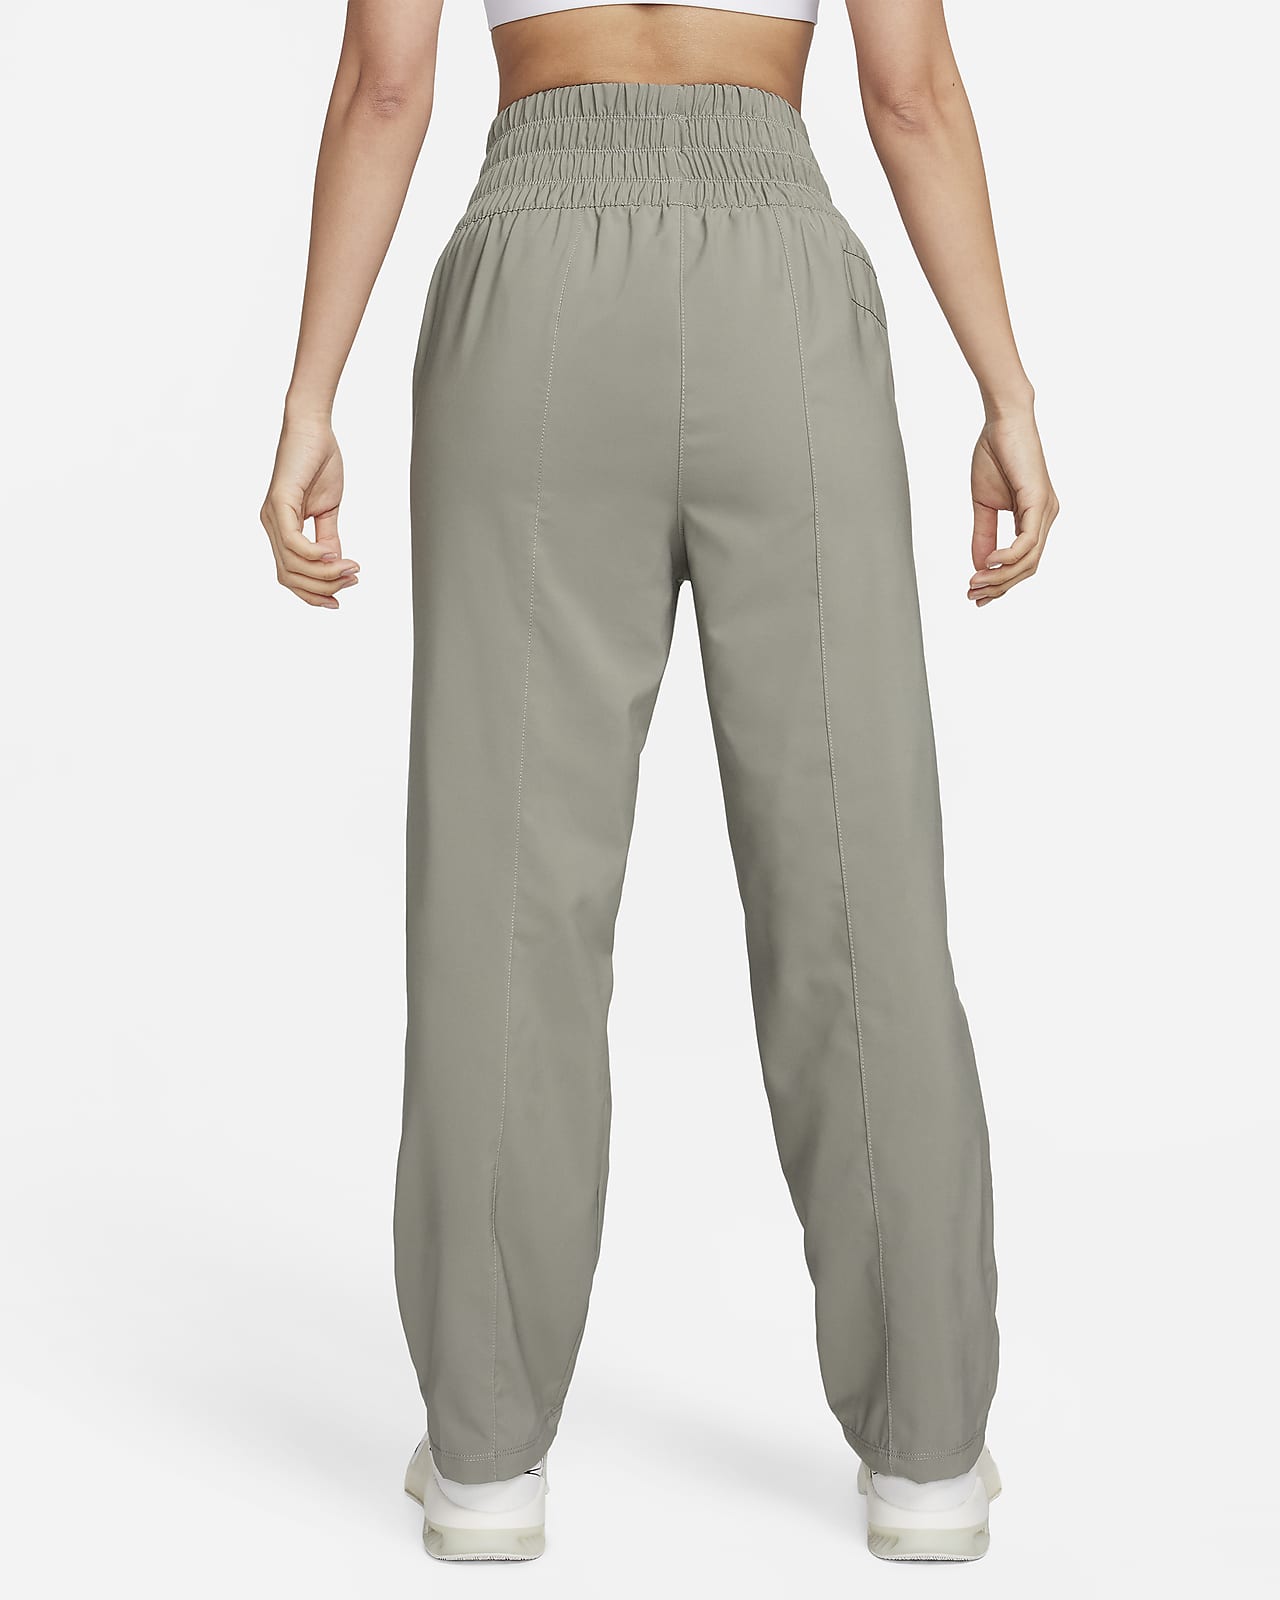 Ladies Trousers Half Elasticated Women Pull Up Pants Formal Office Work  Trousers | eBay